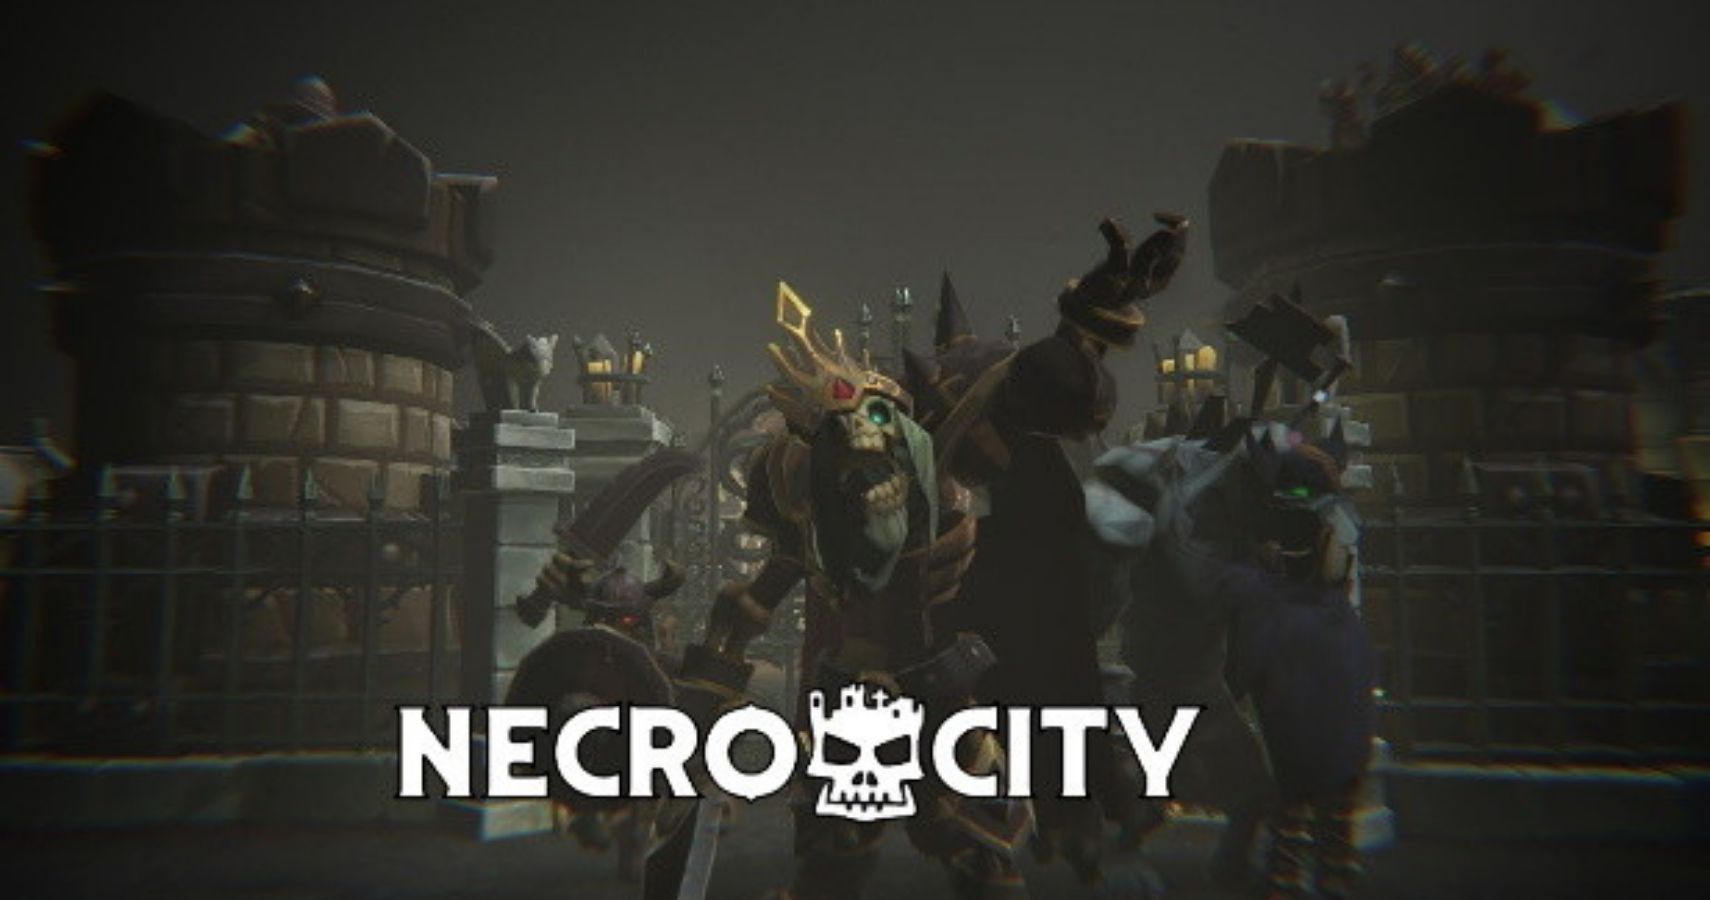 NecroCity Announcement feature image